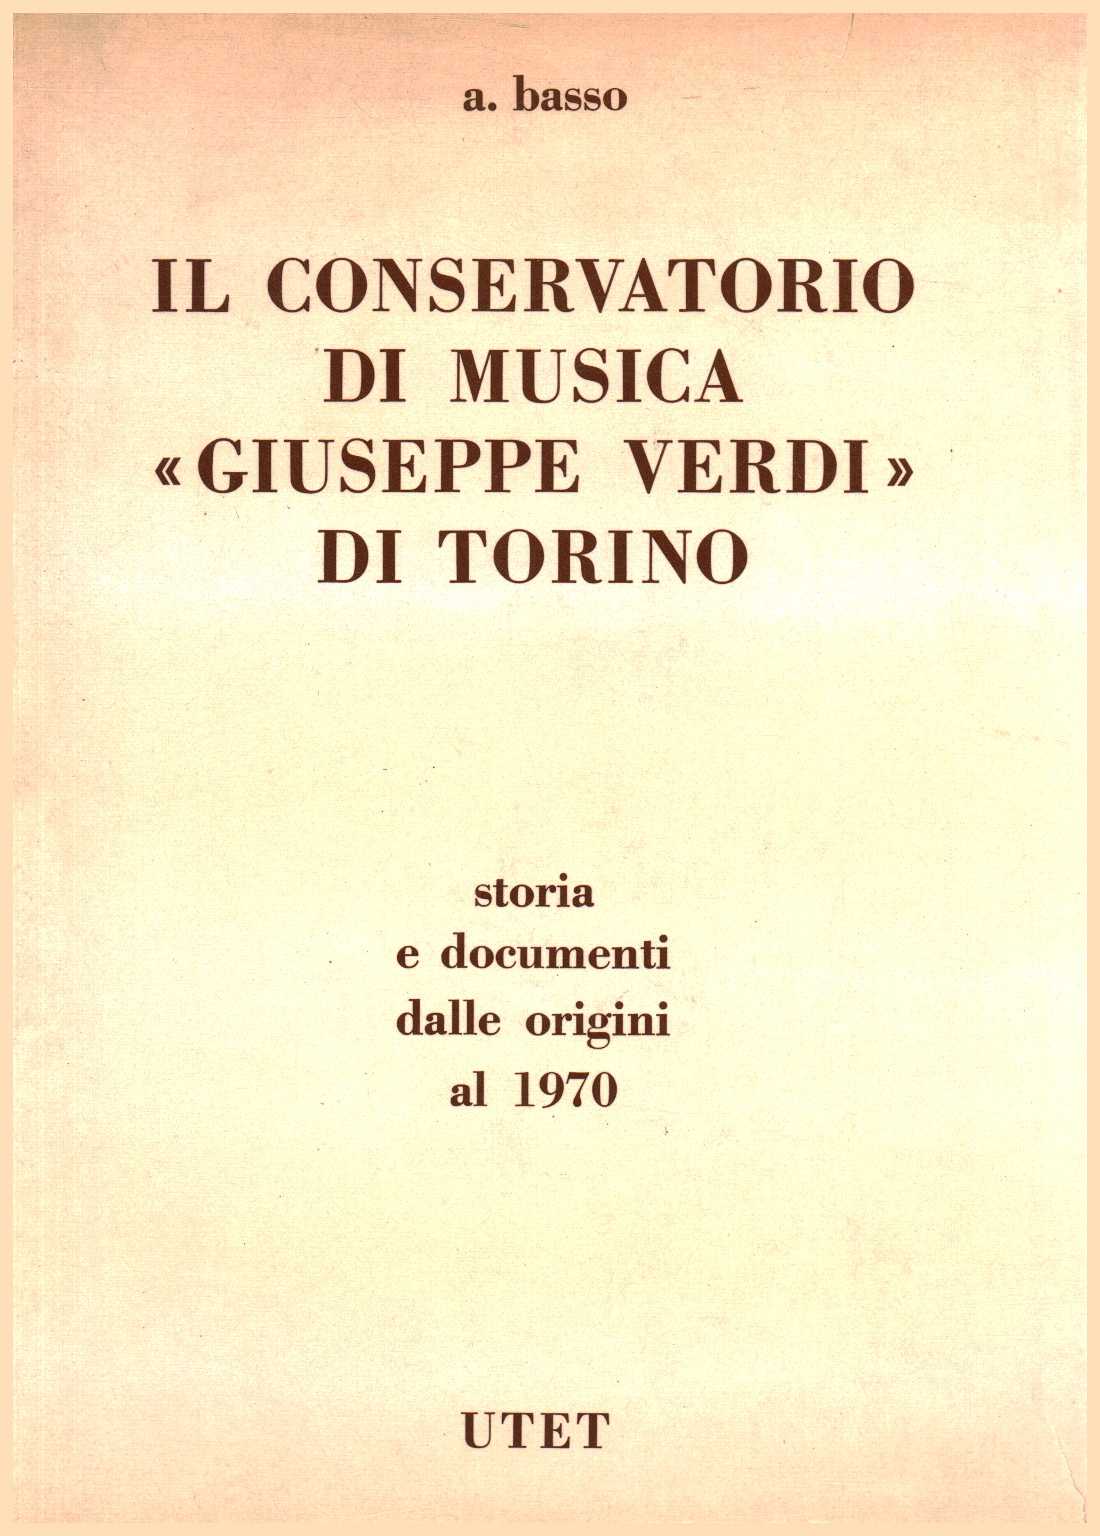 The Conservatory of Music "Giuseppe Verdi" di Tor, s.a.